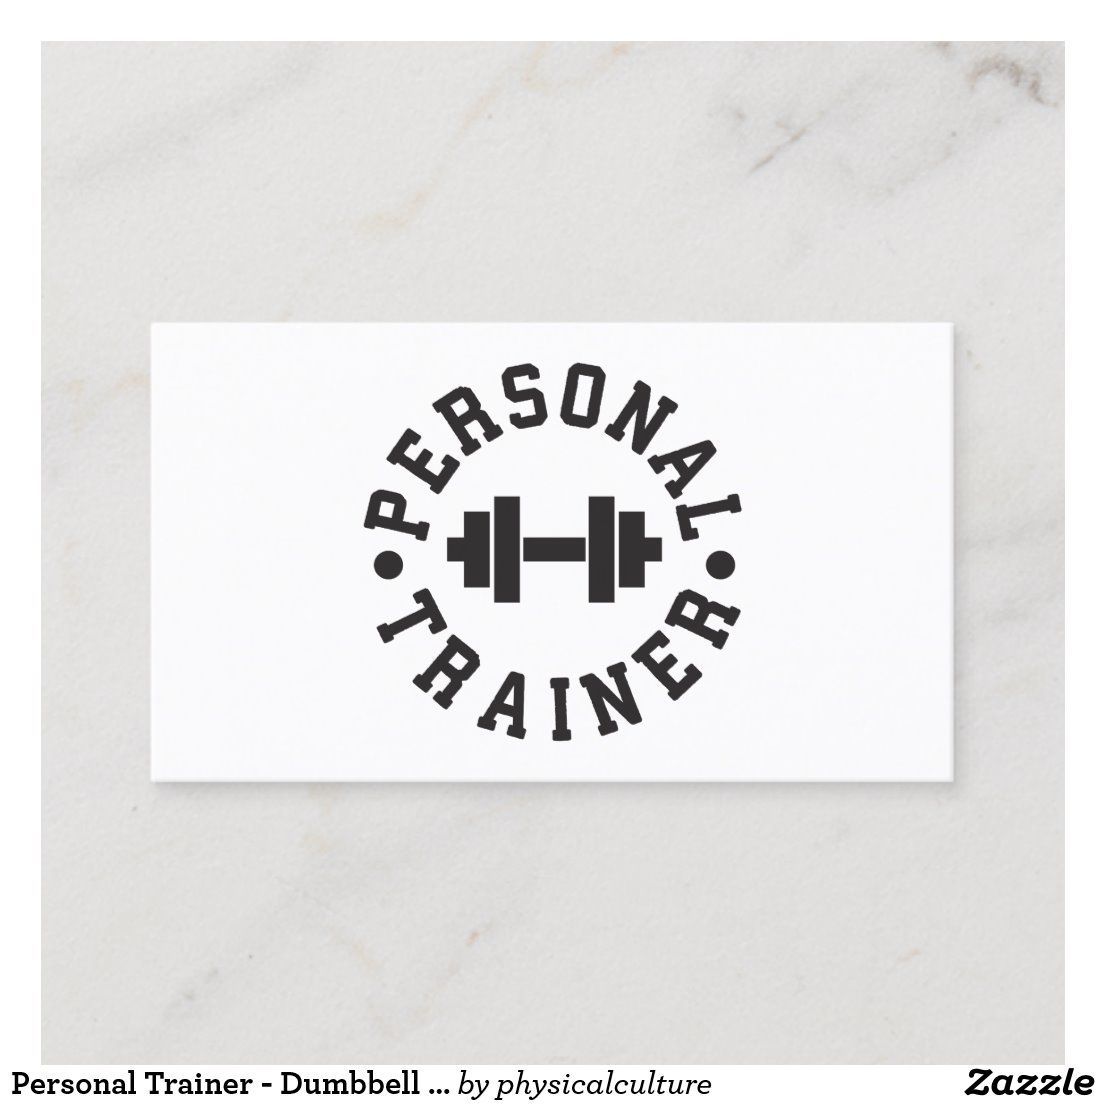 17 fitness Logo posts ideas